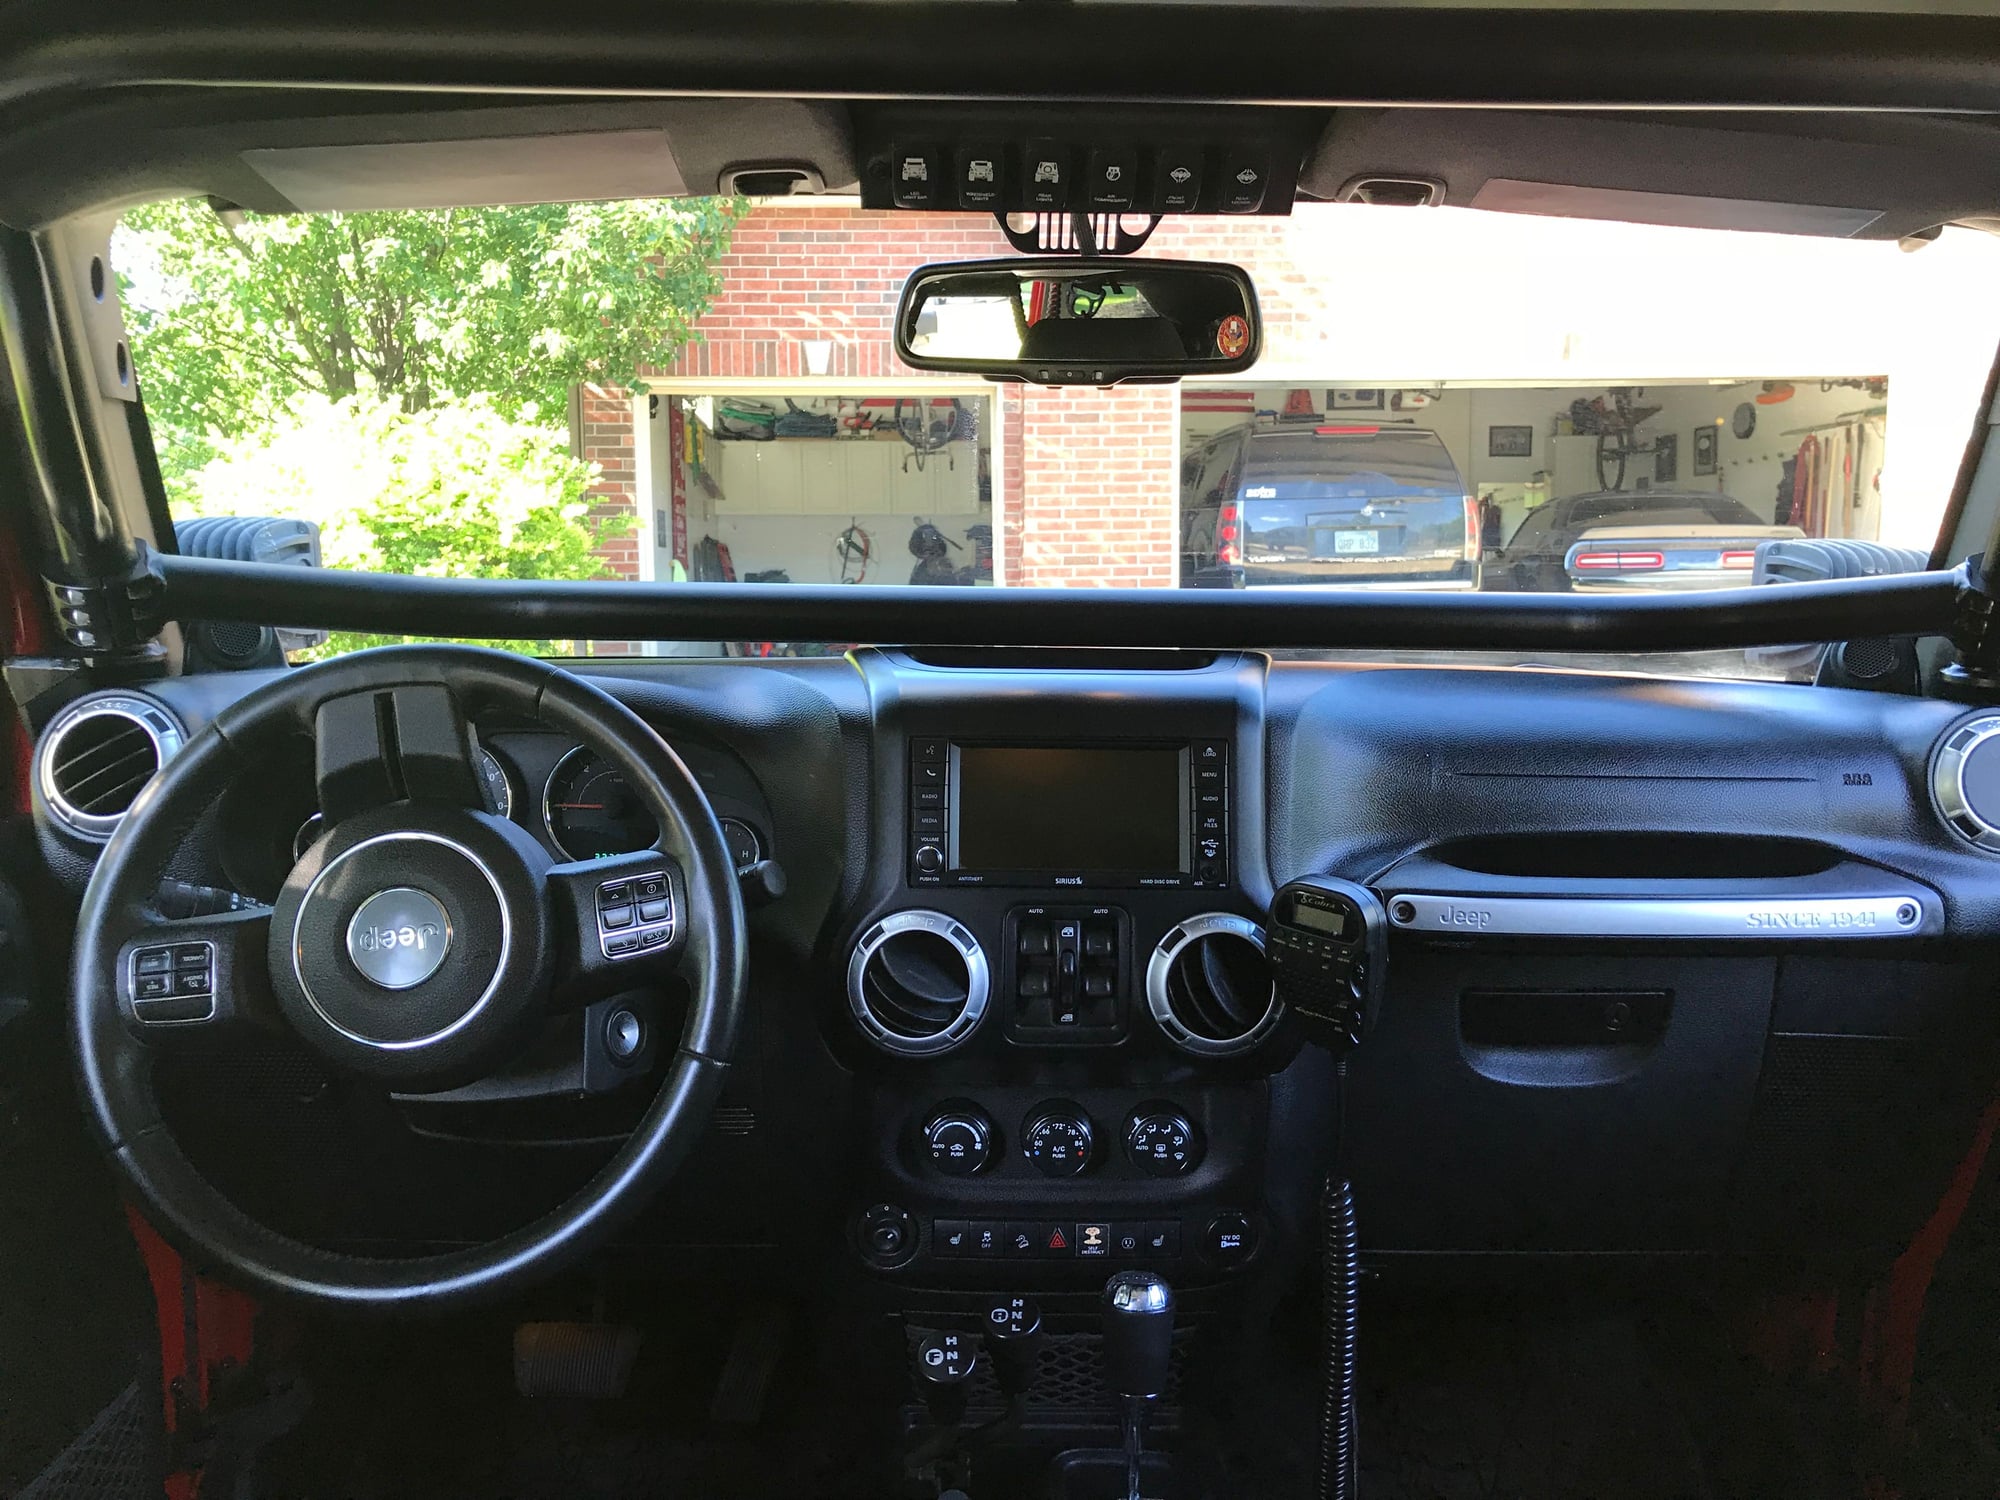 2014 Jeep Wrangler - 2014 Hemi JKU on tons - Used - VIN 1C4BJWFG9EL101847 - 32,000 Miles - 8 cyl - 4WD - Automatic - Red - Olathe, KS 66062, United States